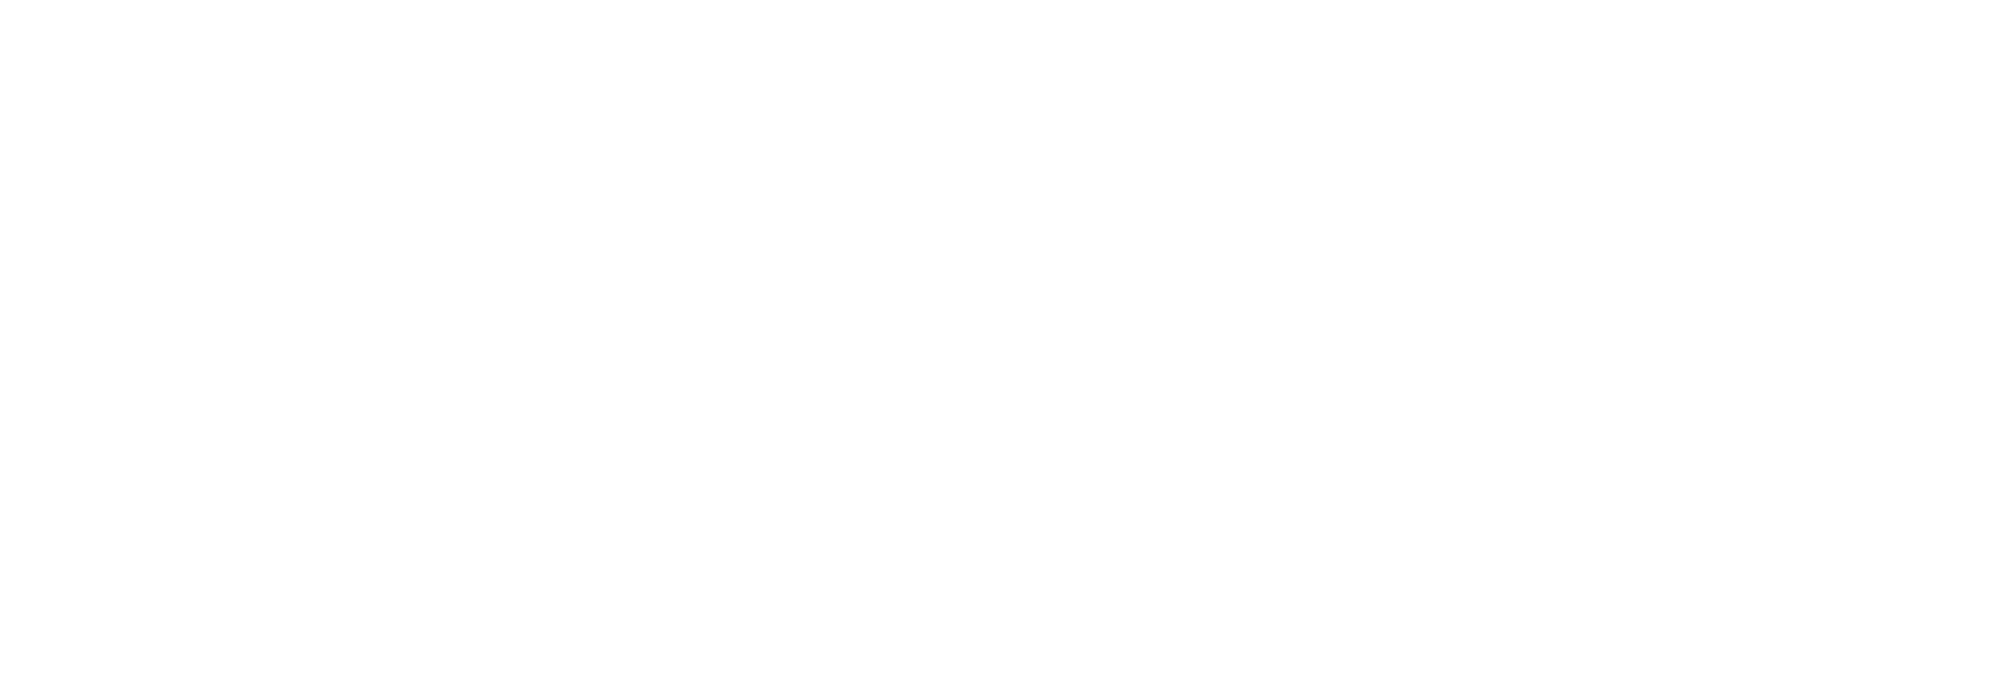 Onica by Rackspace Technology logo